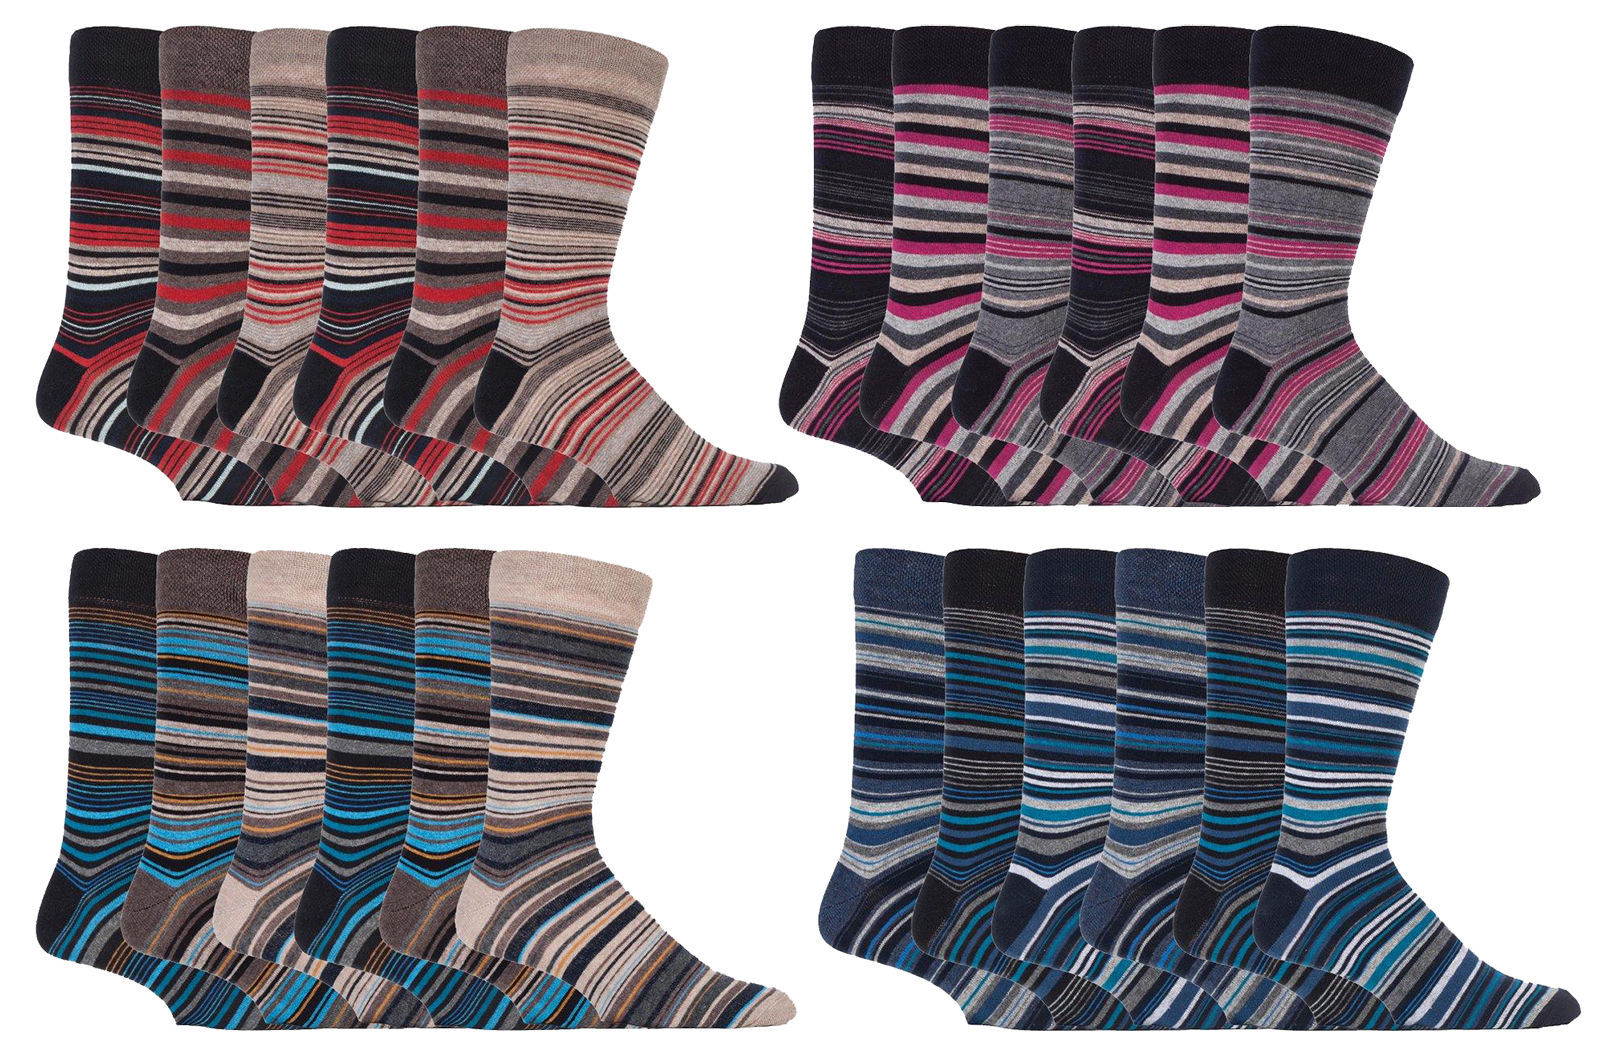 Sock Snob - 6 Pack Mens Cotton Colorful Striped Fashion Dress Crew Socks 7-12 US